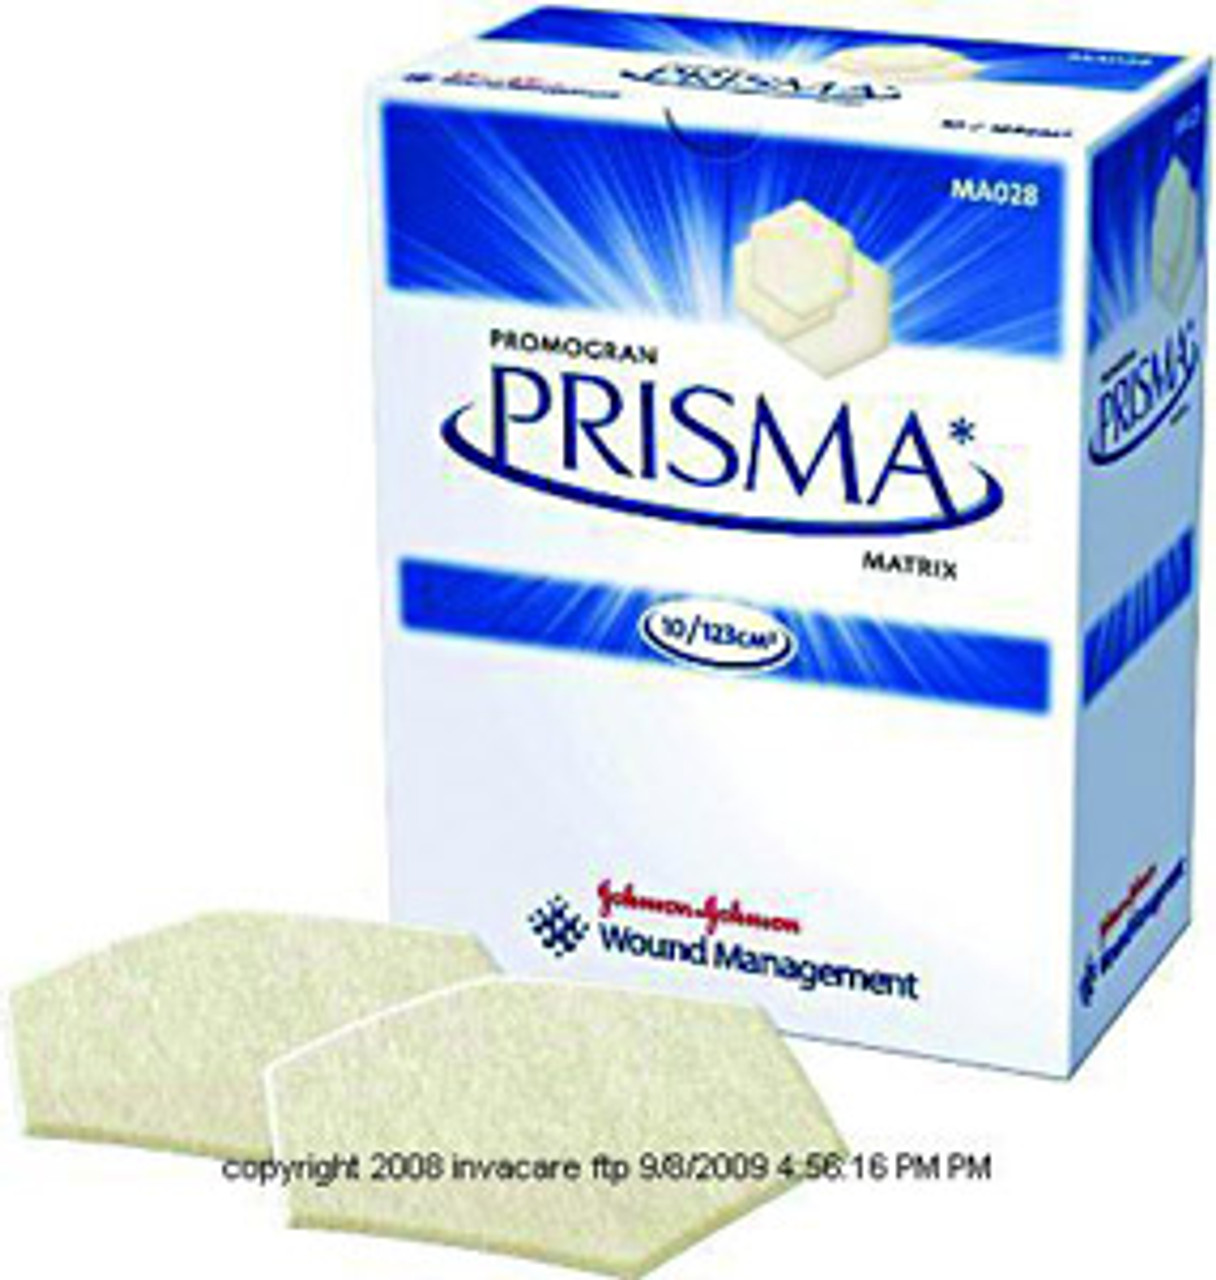 PROMOGRAN® PRISMA® Matrix JNJMA028BX